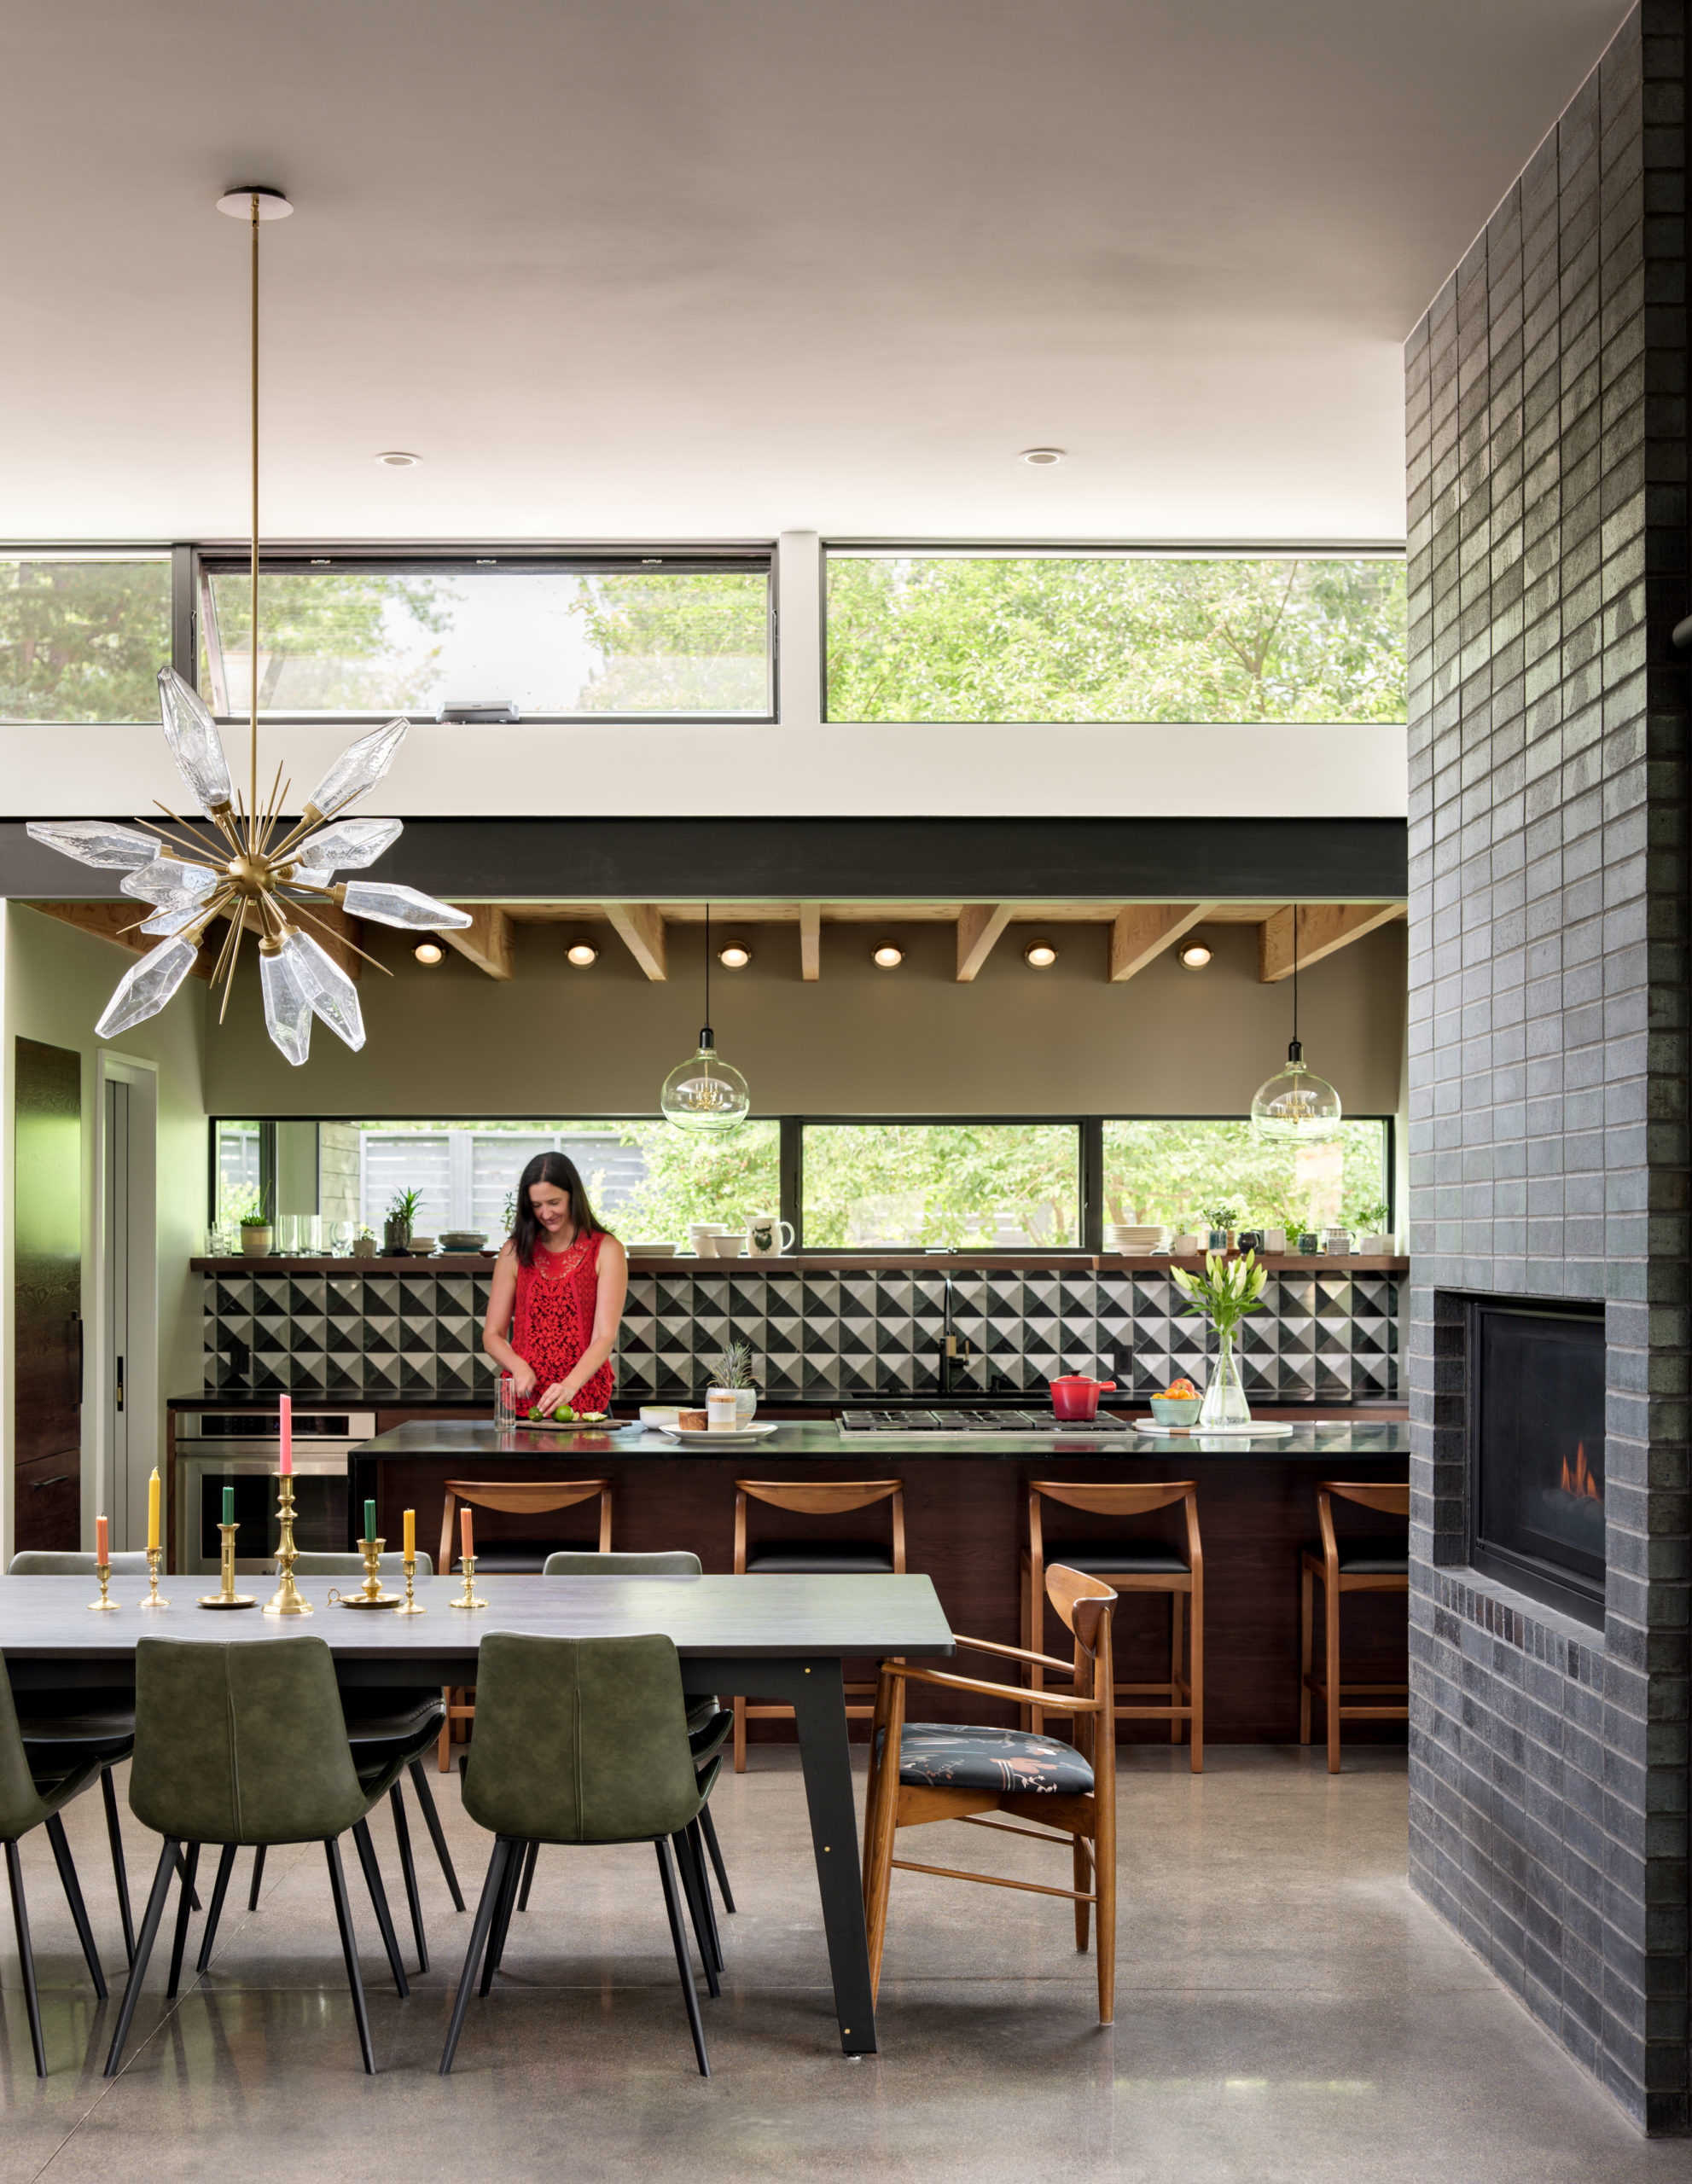 Mariposa Garden House | Renée del Gaudio Architecture